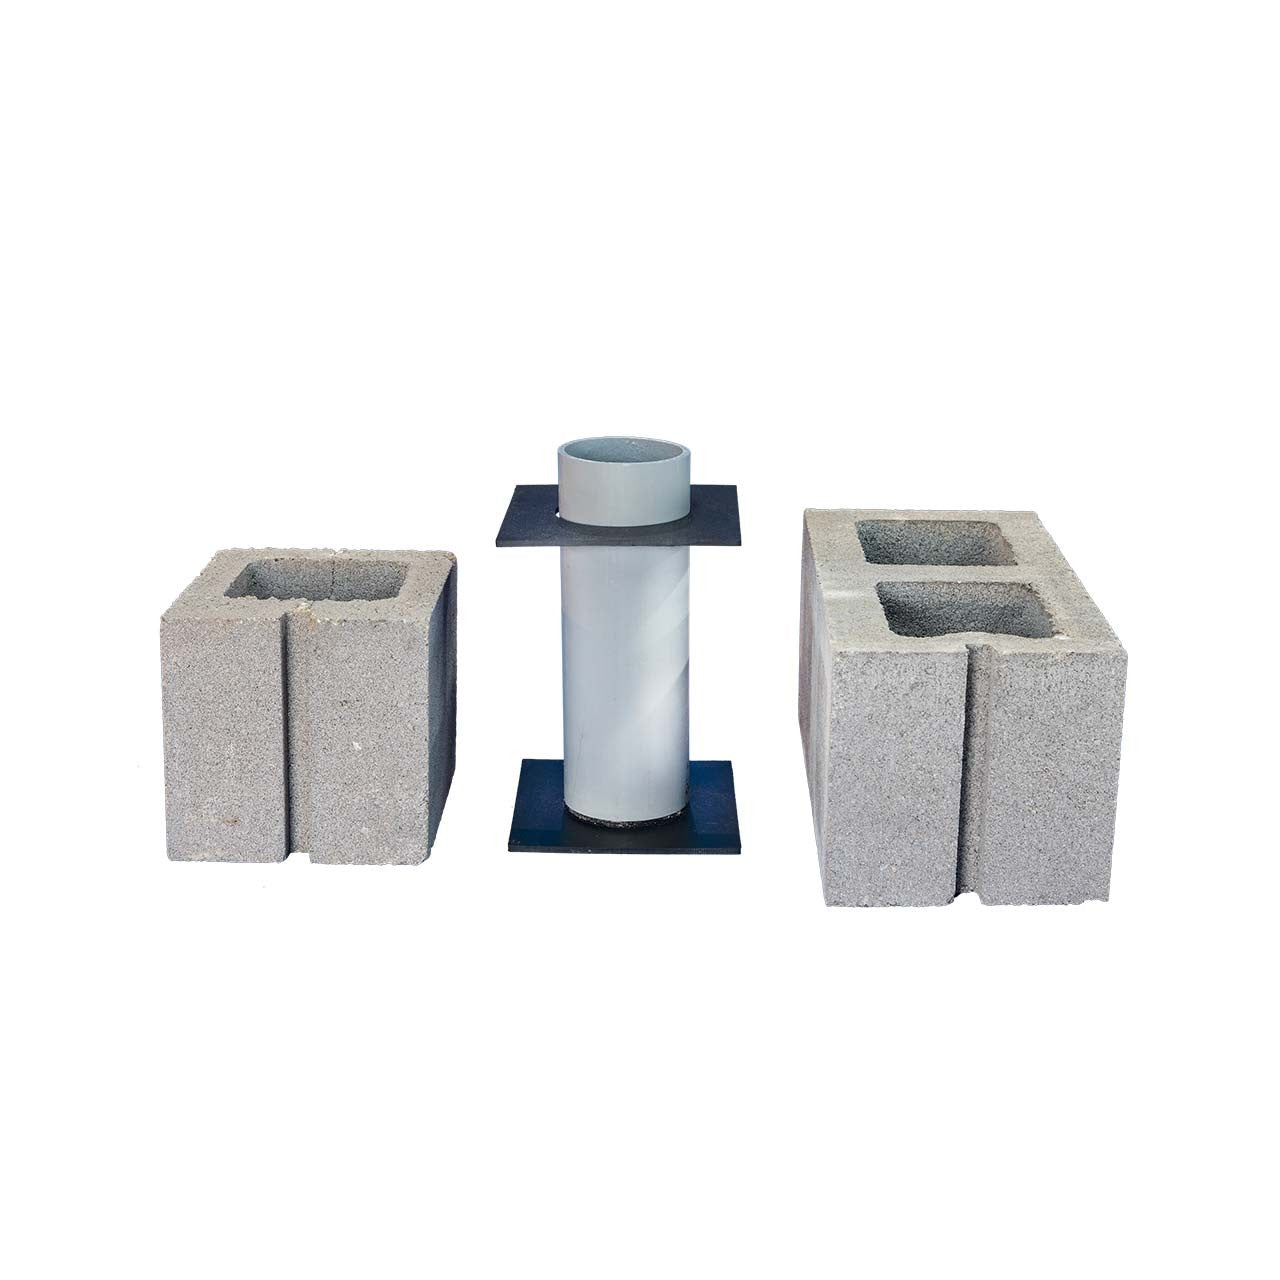 3 Concrete Block Adapters